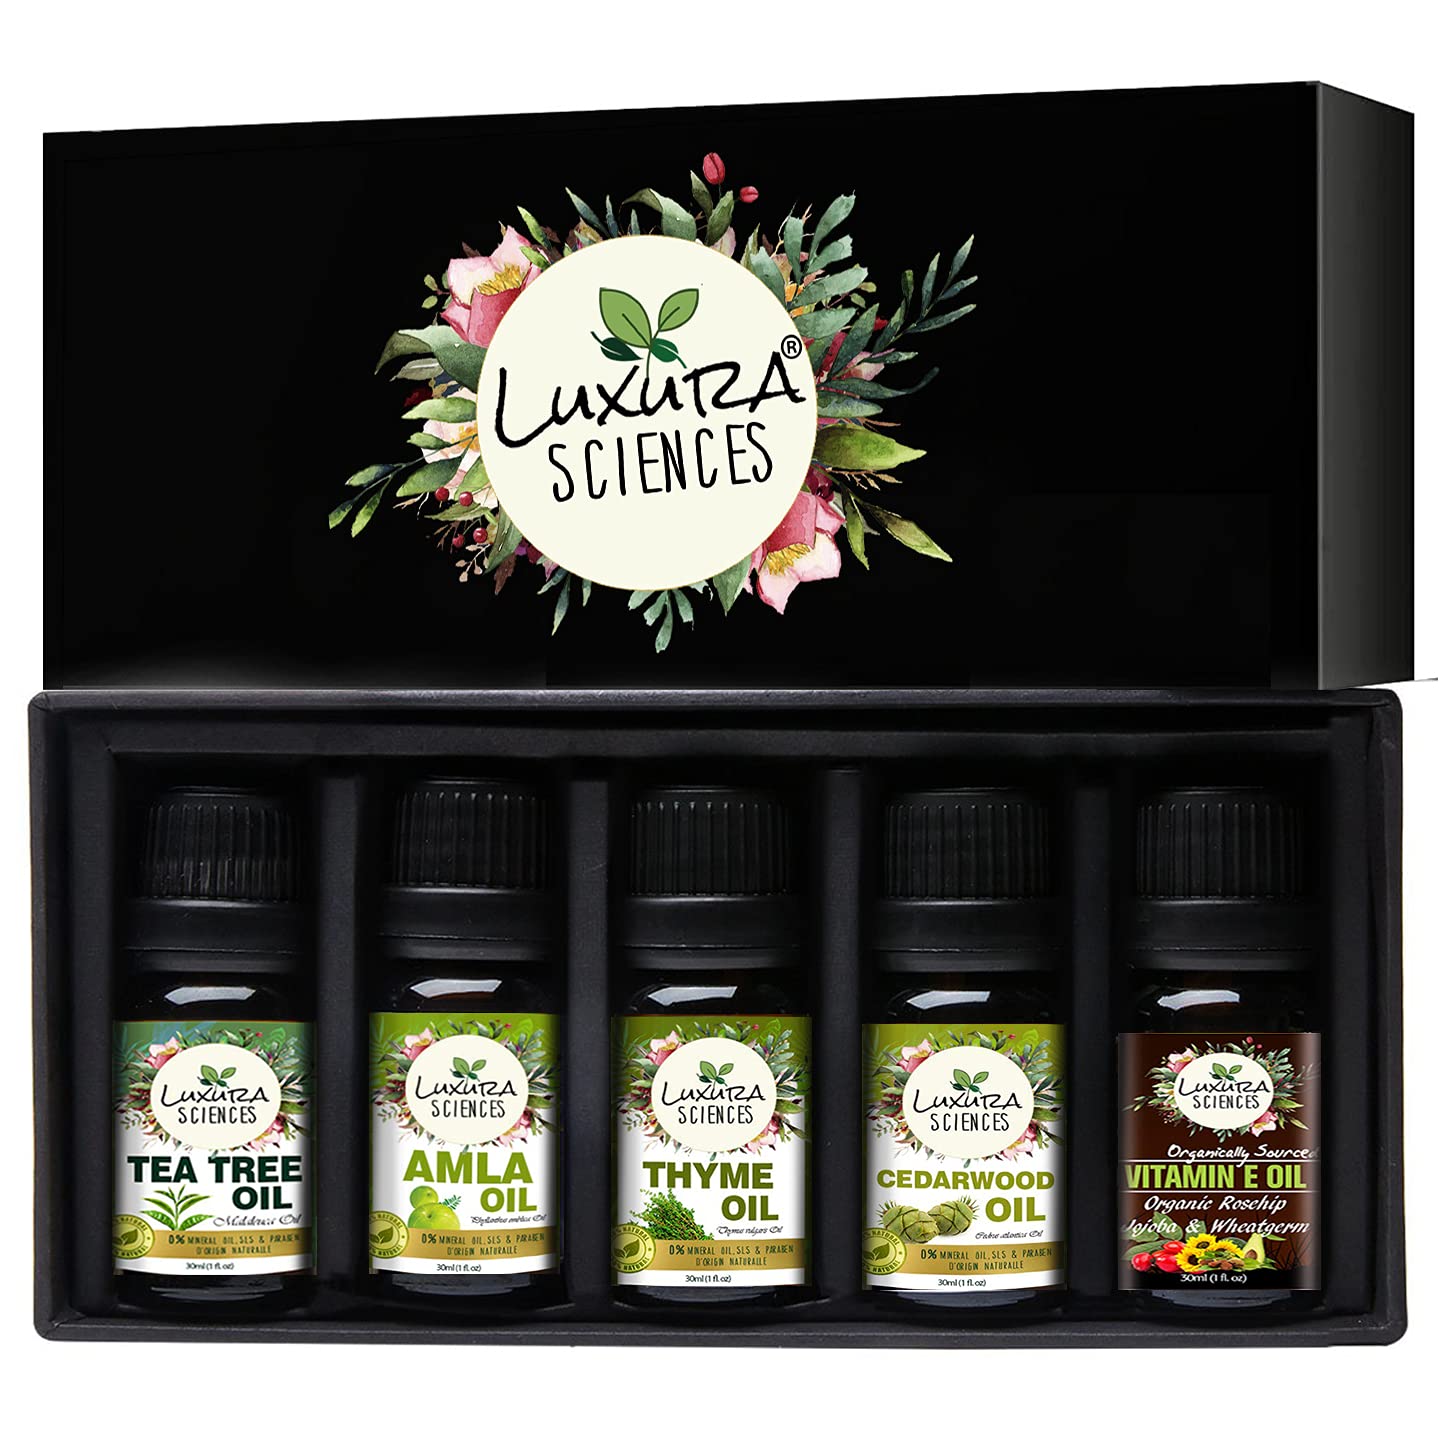 Luxura Sciences Organic Essential Oil Anti Dandruff - Tea Tree Oil, Thyme Oil, Amla Oil, CedarWood Oil, Vitamin E Oil - BUDNE